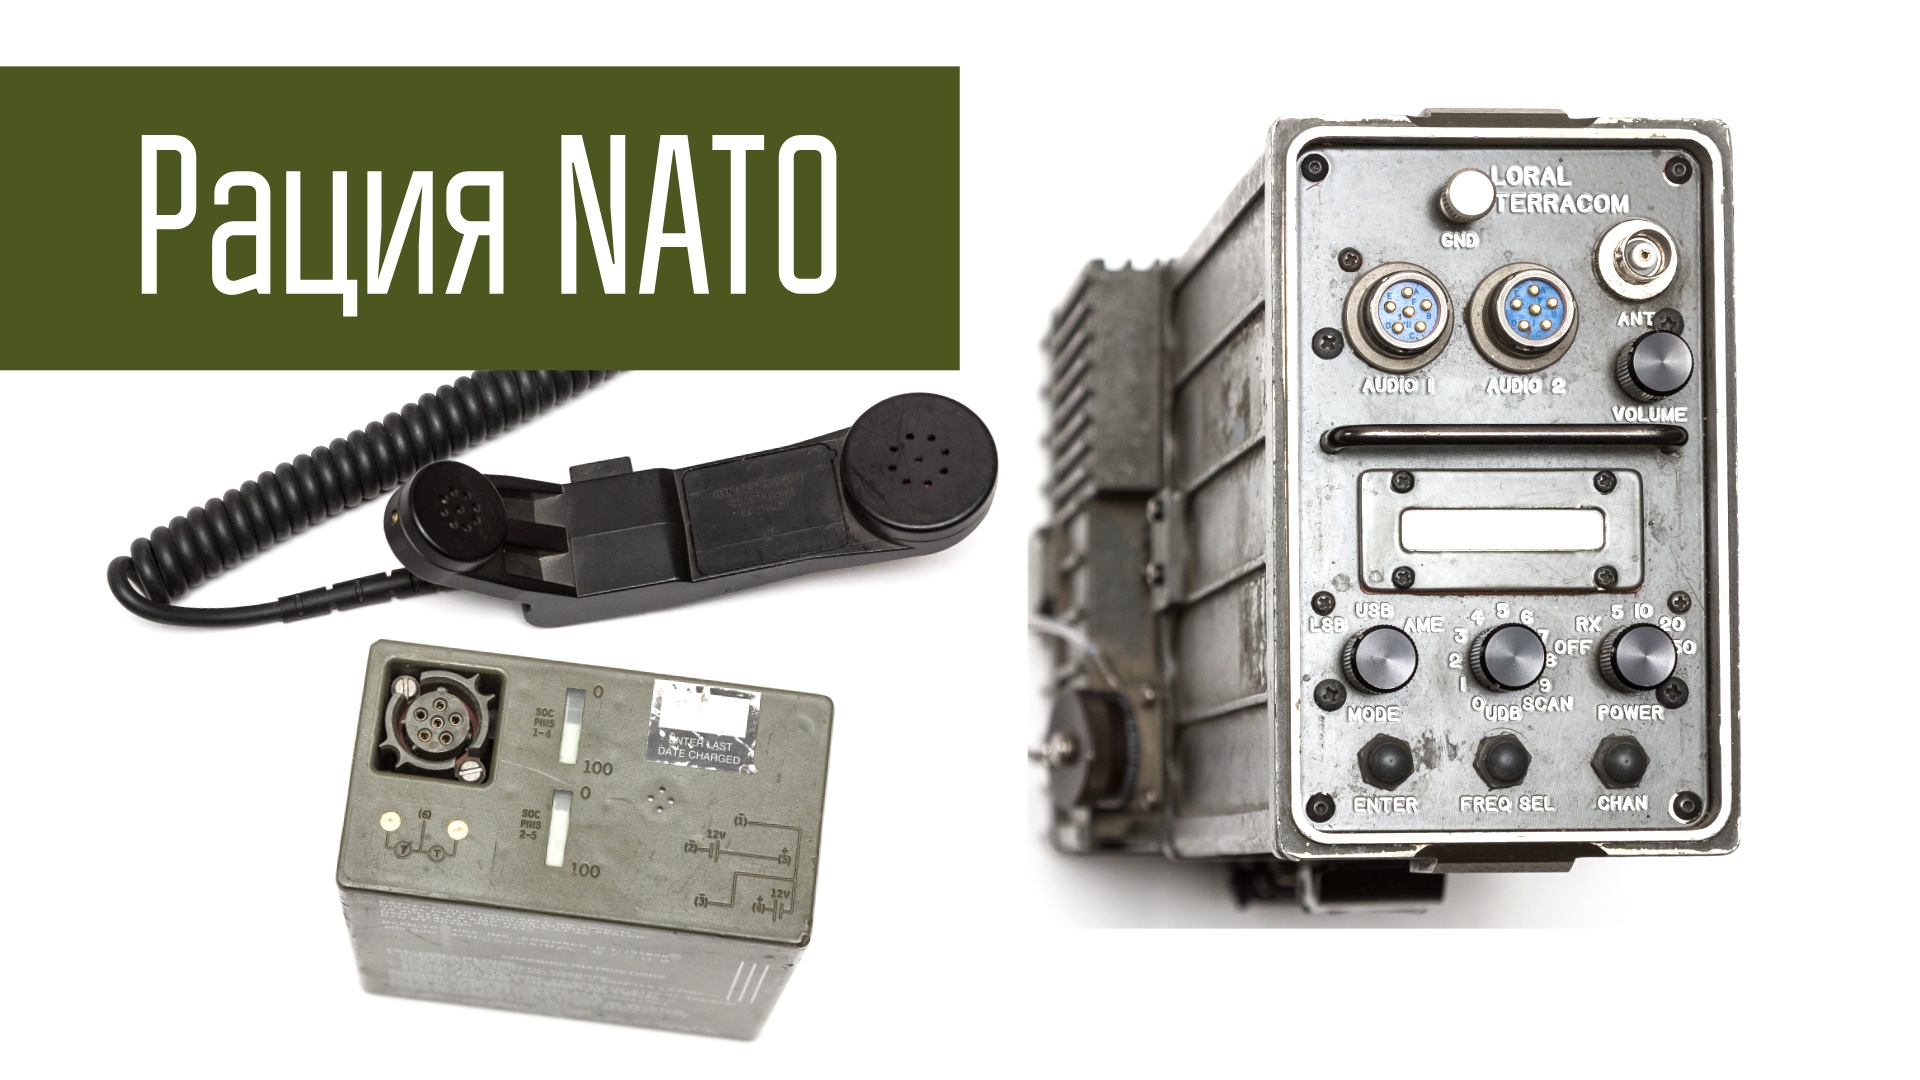 PRC-132 LORAL TERRACOM. Переносная КВ радиостанция НАТО. HF military manpack radio.